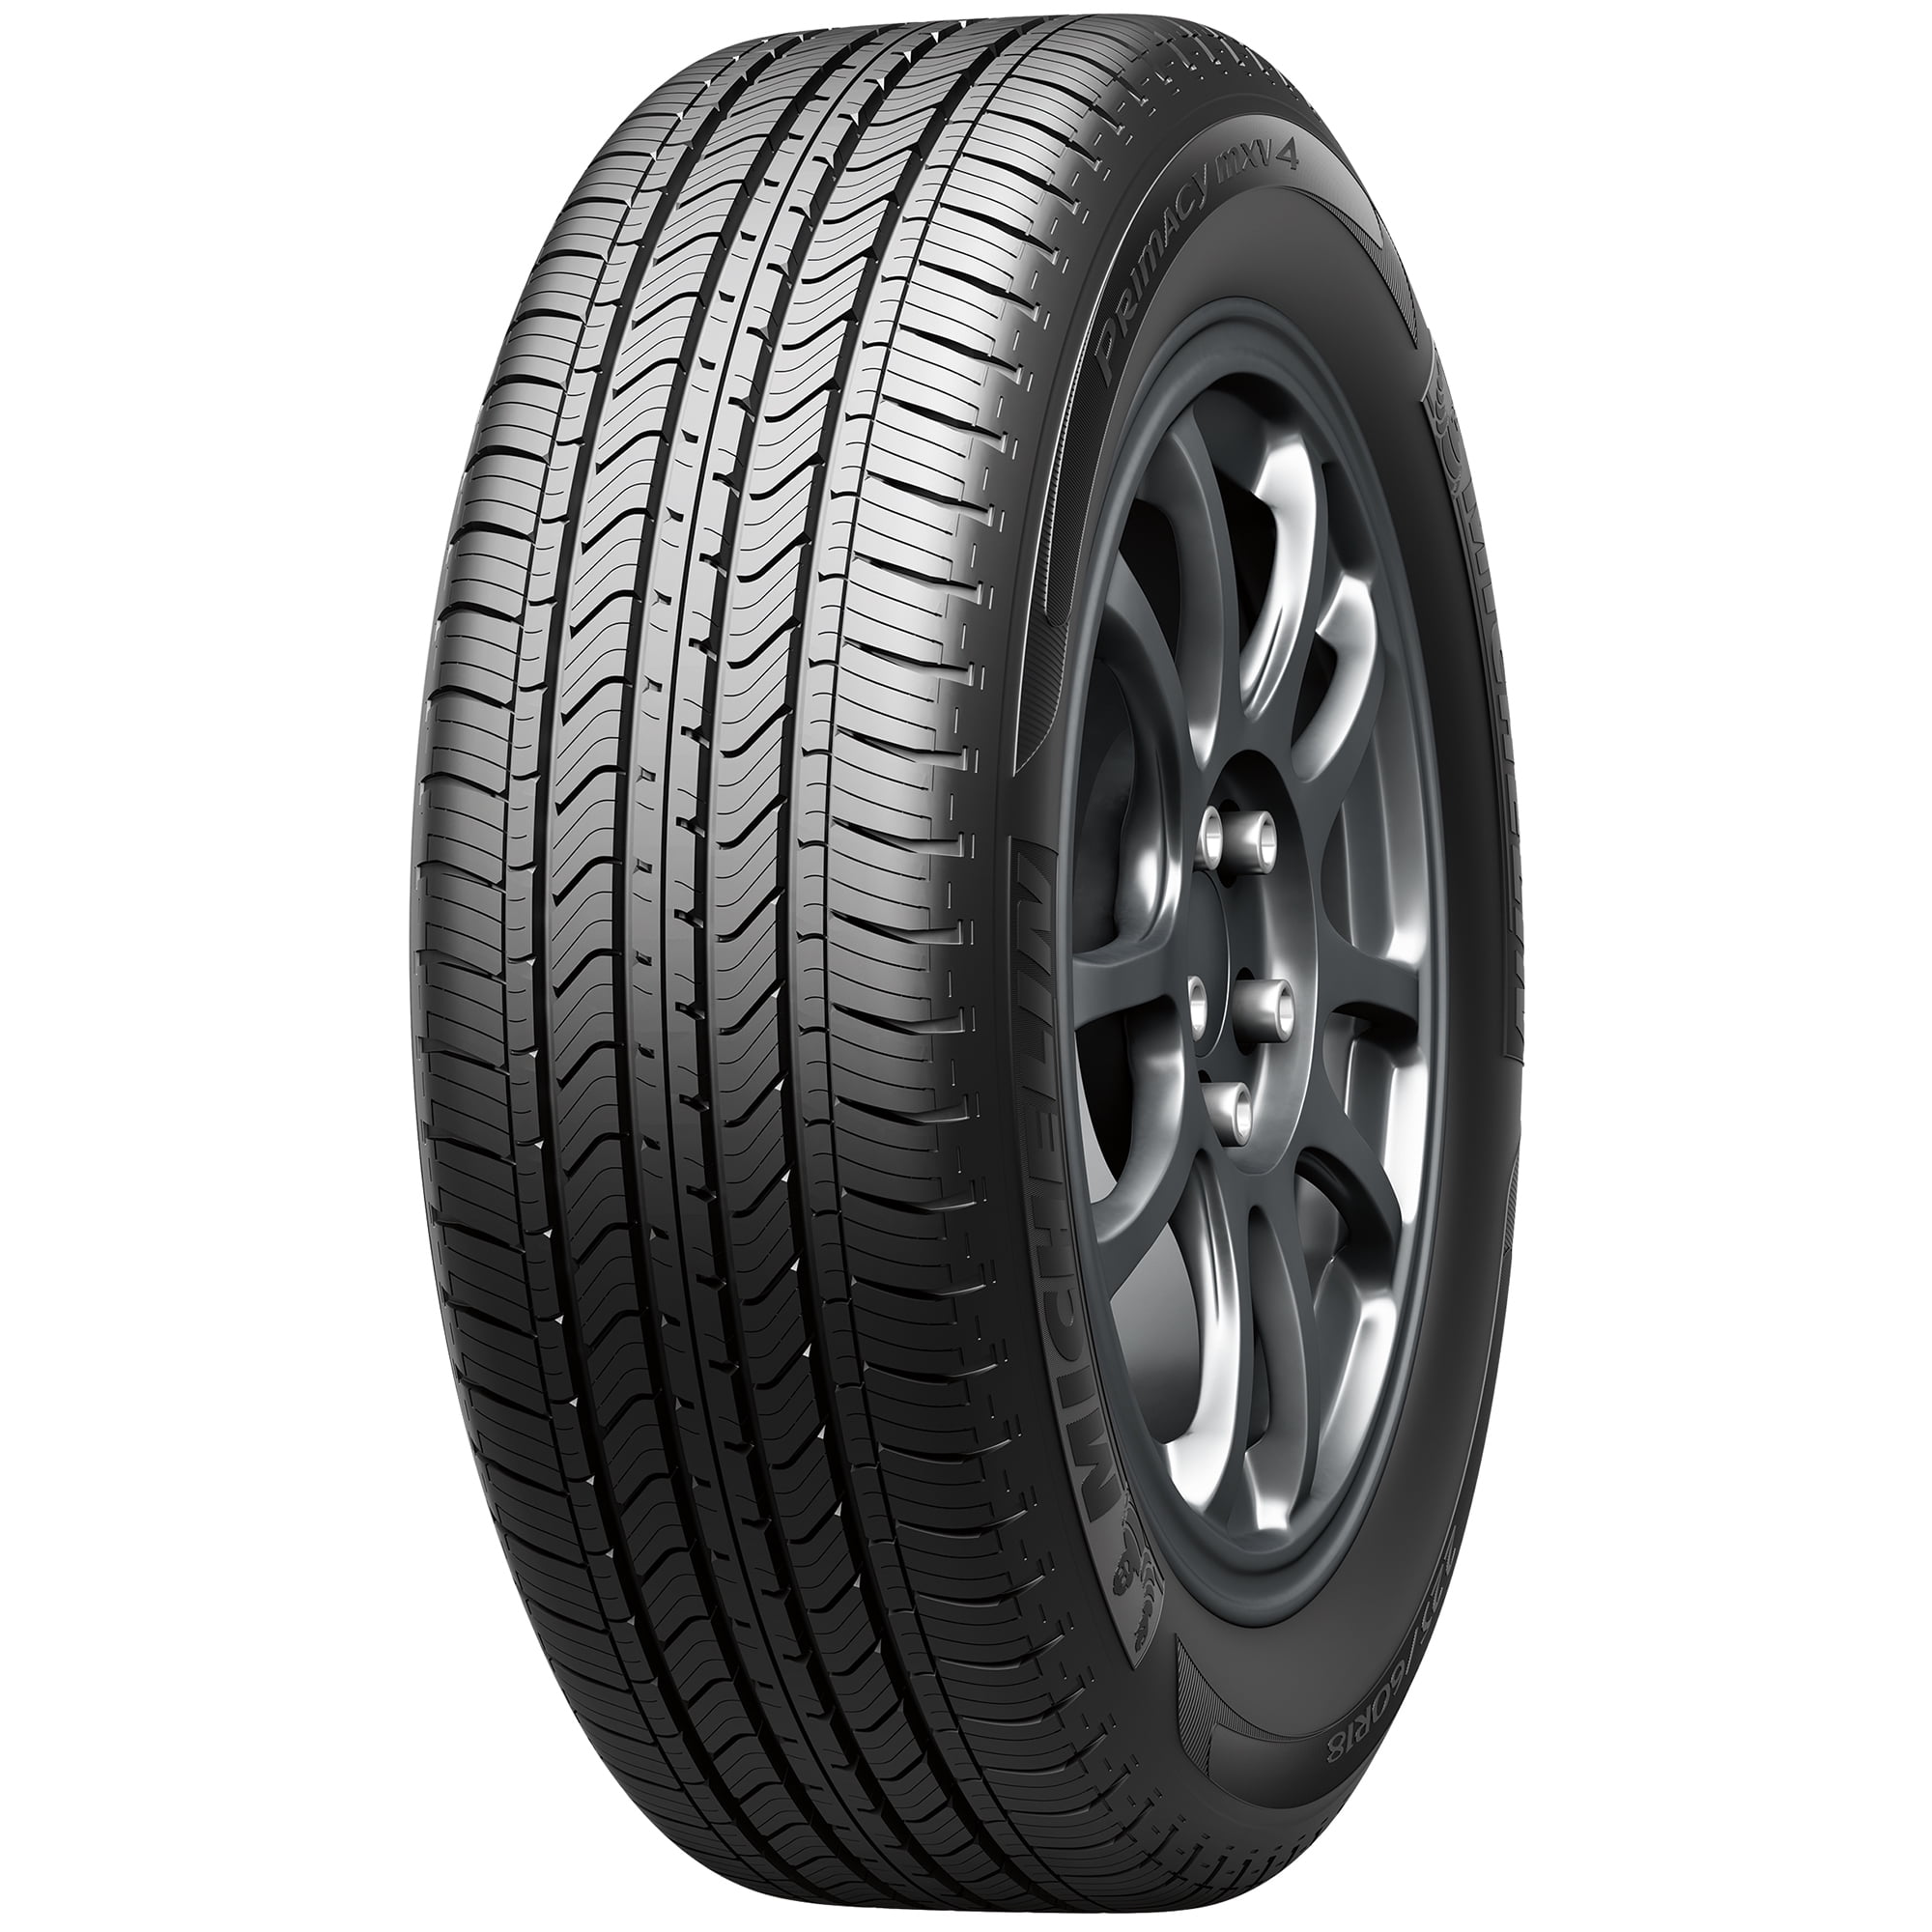 Michelin Primacy MXV4 Radial Tire 205/55R16 89H 